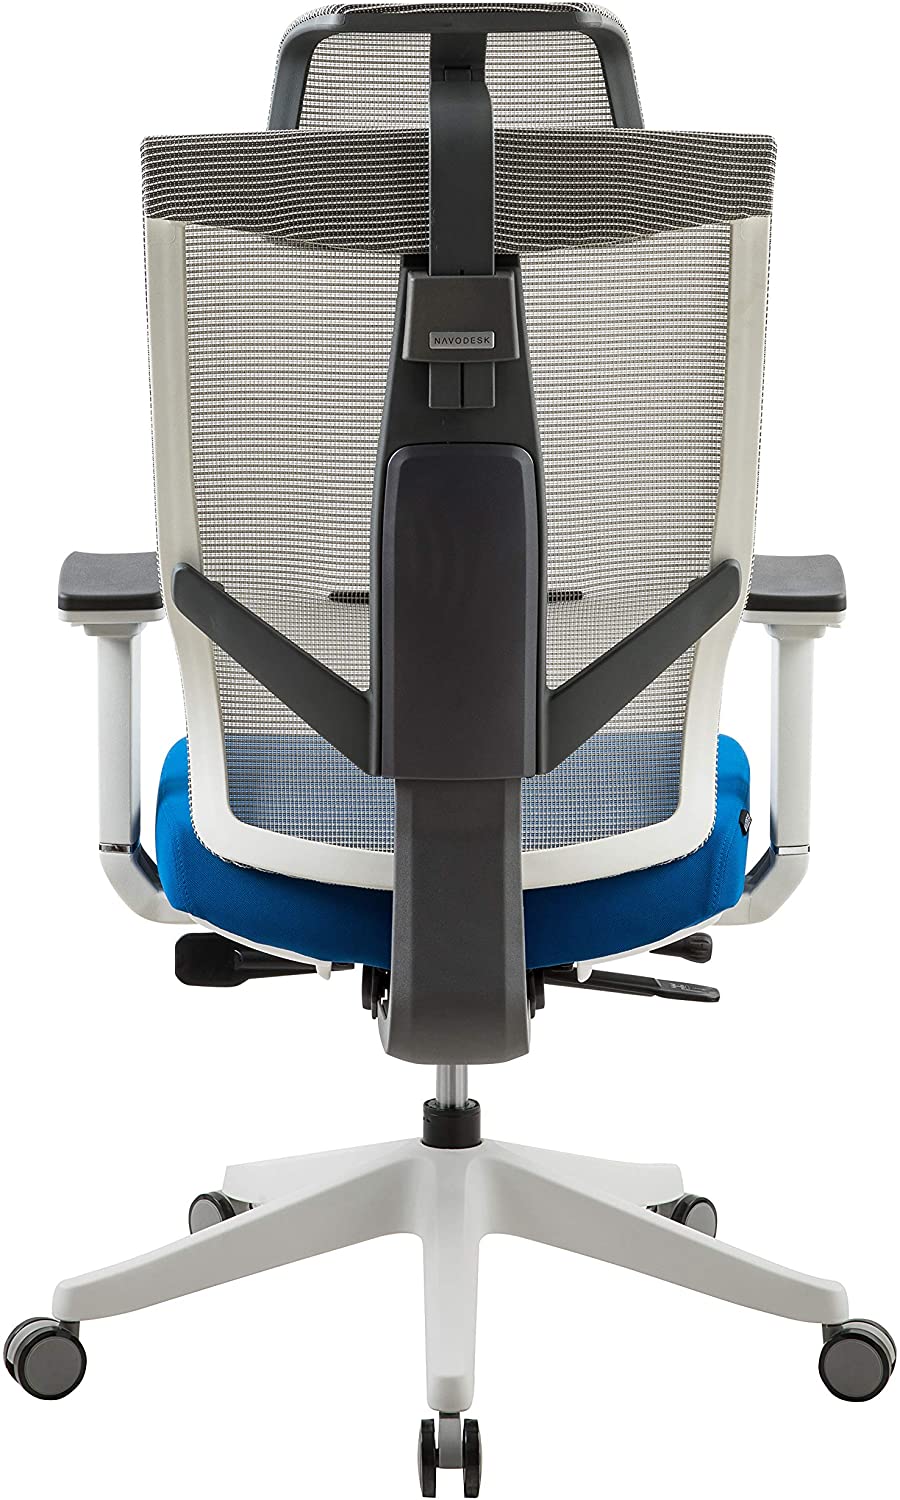 Premium Quality Aero Fabric Chairs in UAE - Navodesk